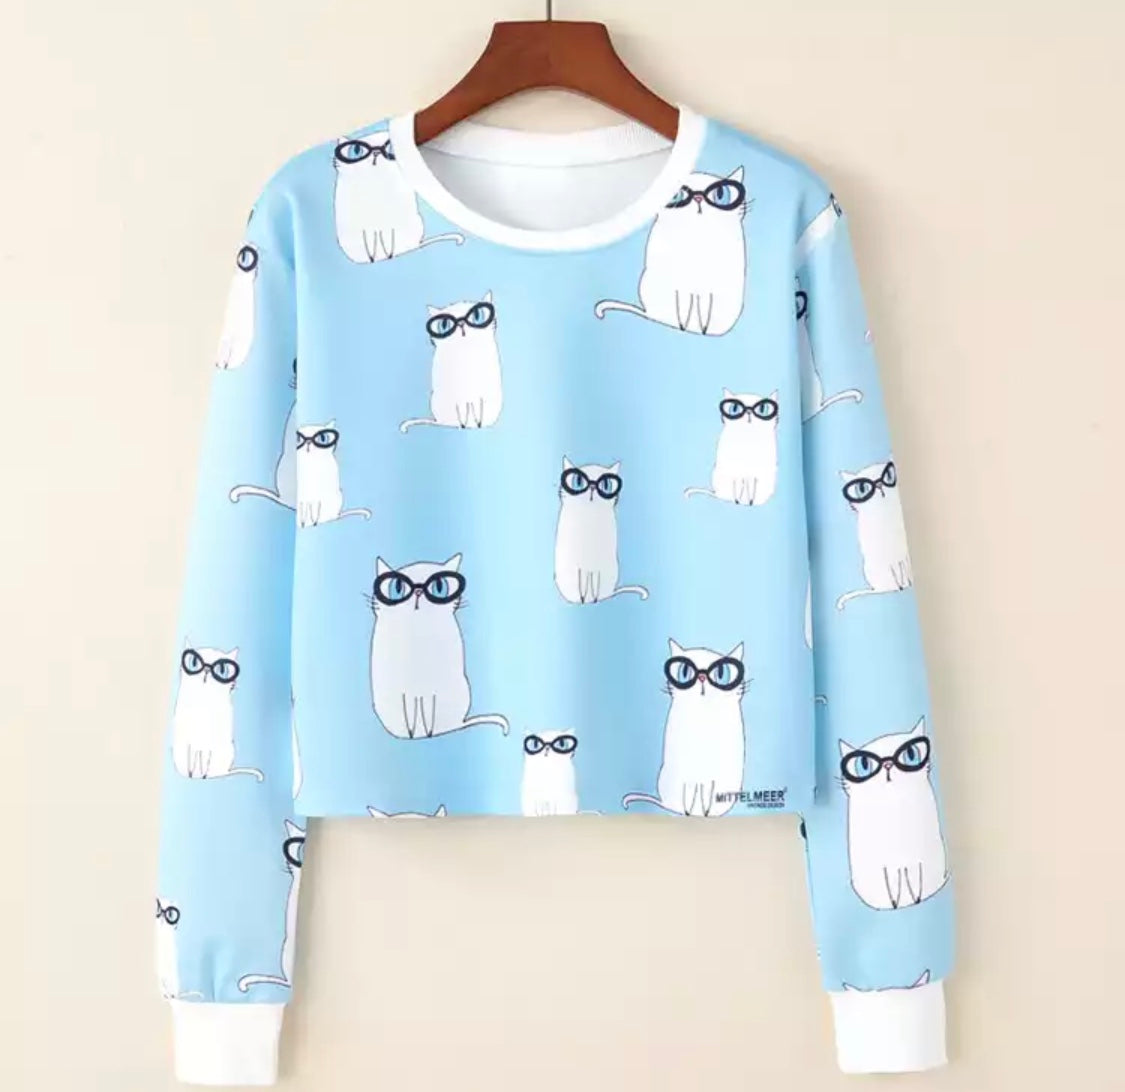 Cool Cat Sweater